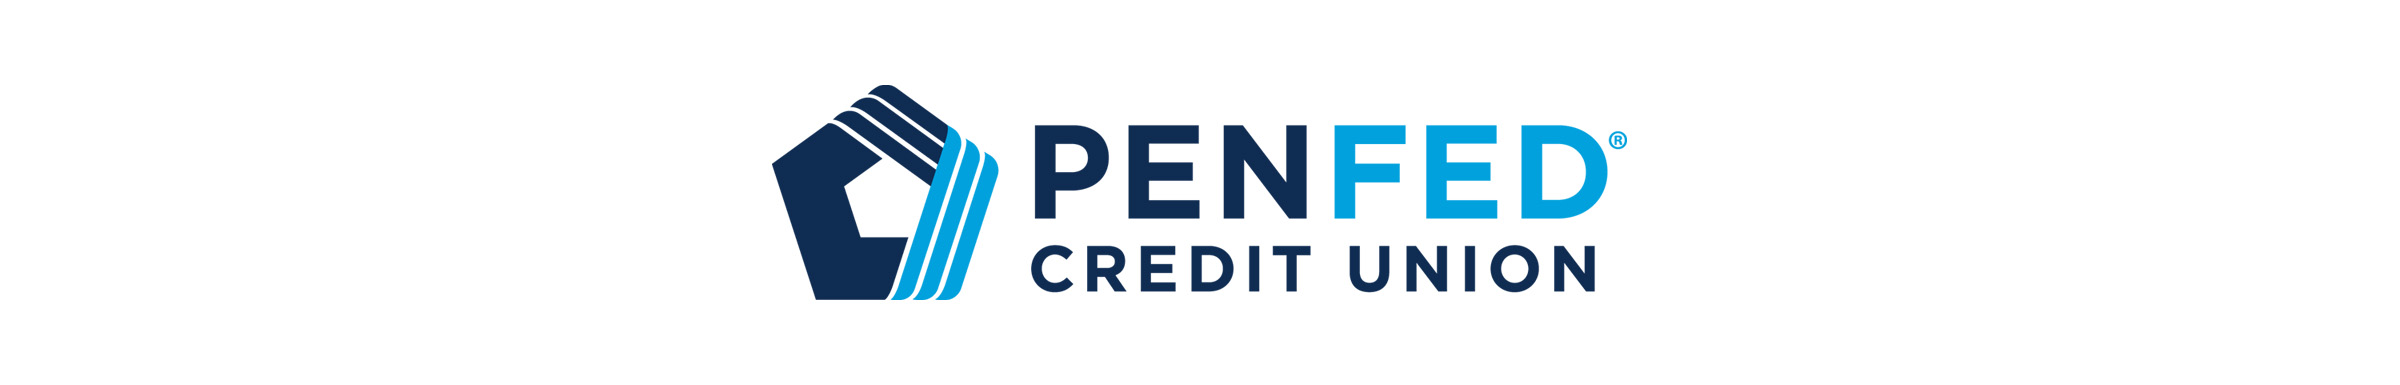 PenFed logo